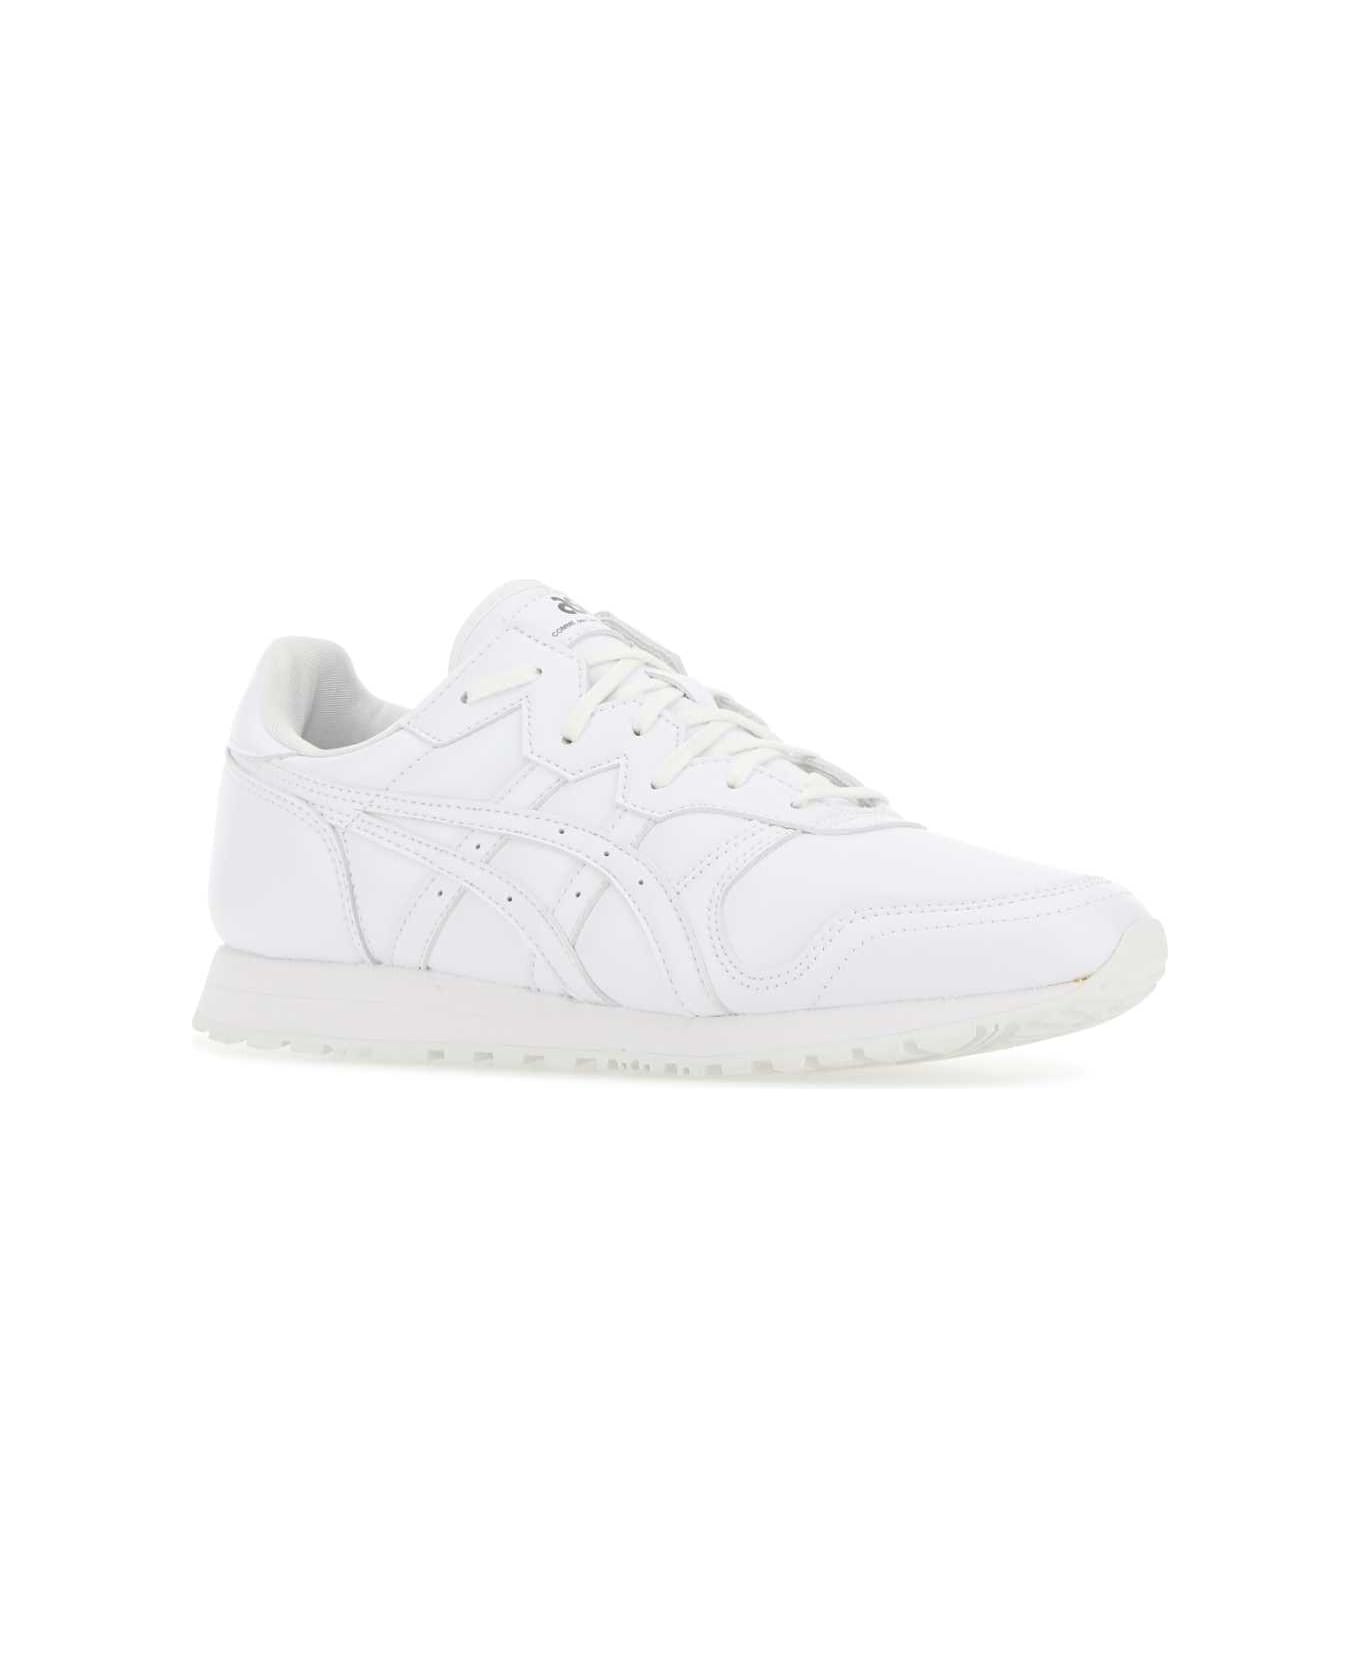 Comme des Garçons Shirt White Synthetic Leather Oc Runner Sneakers - WHITE